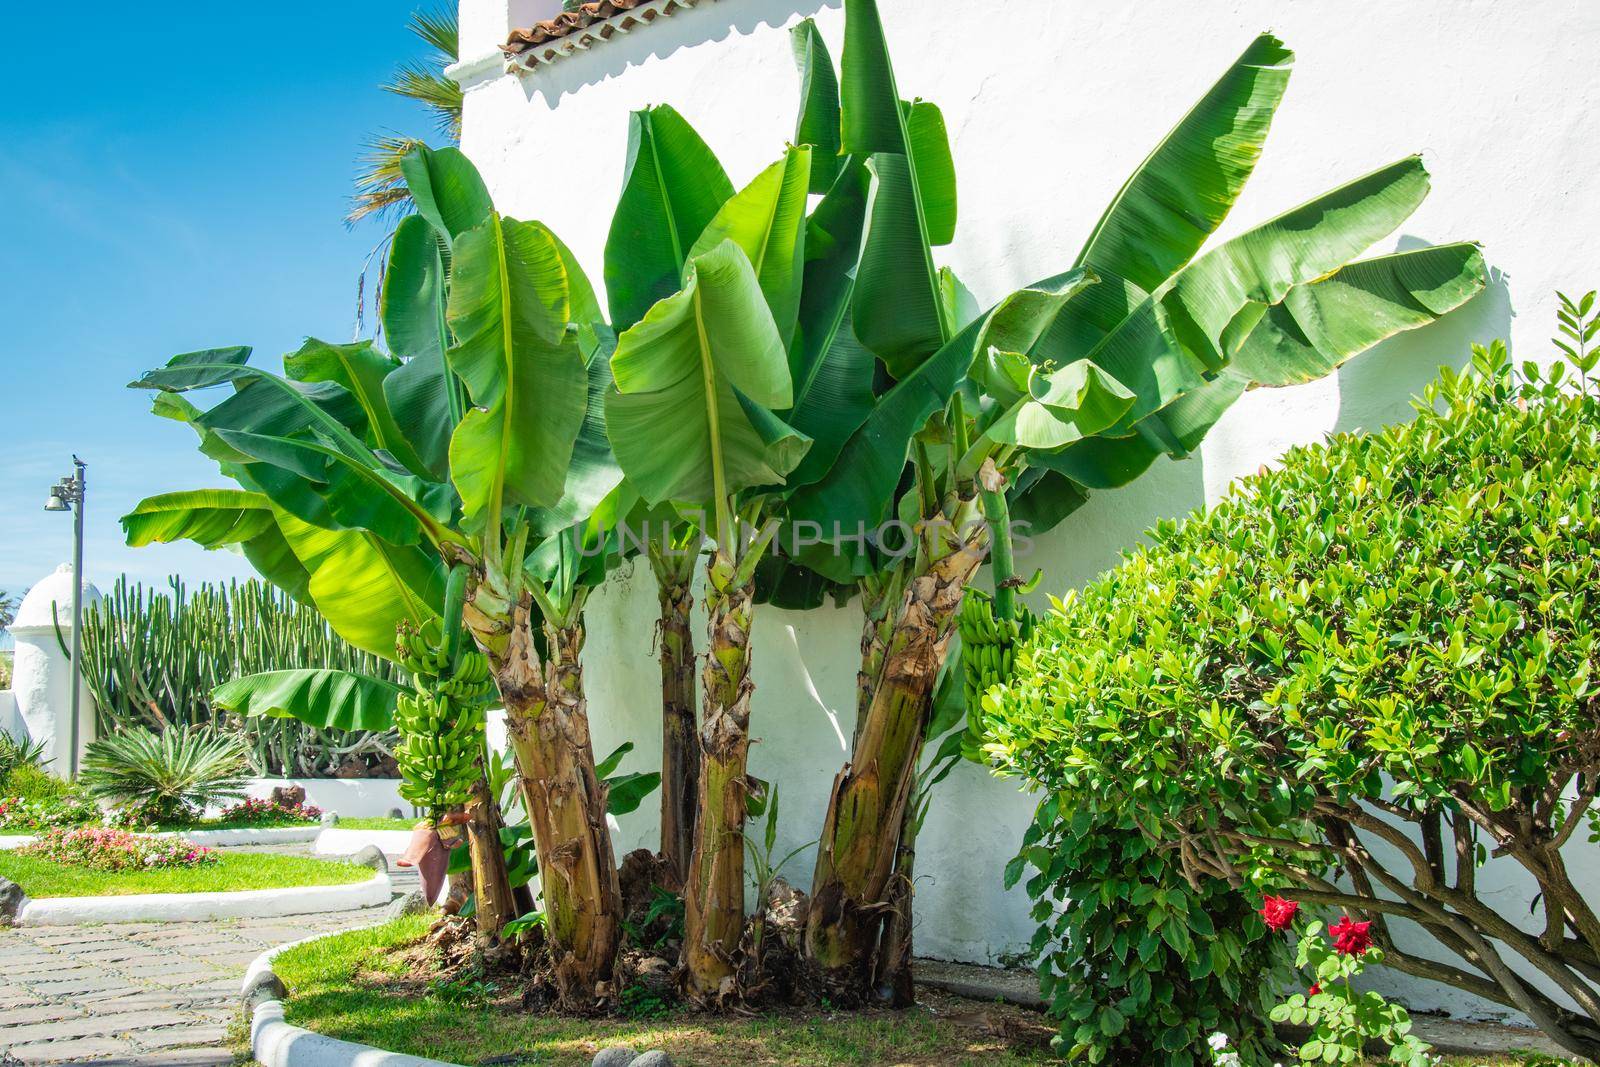 Beautiful shot of banana trees, Puerto de la Cruz, Tenerife, Spain